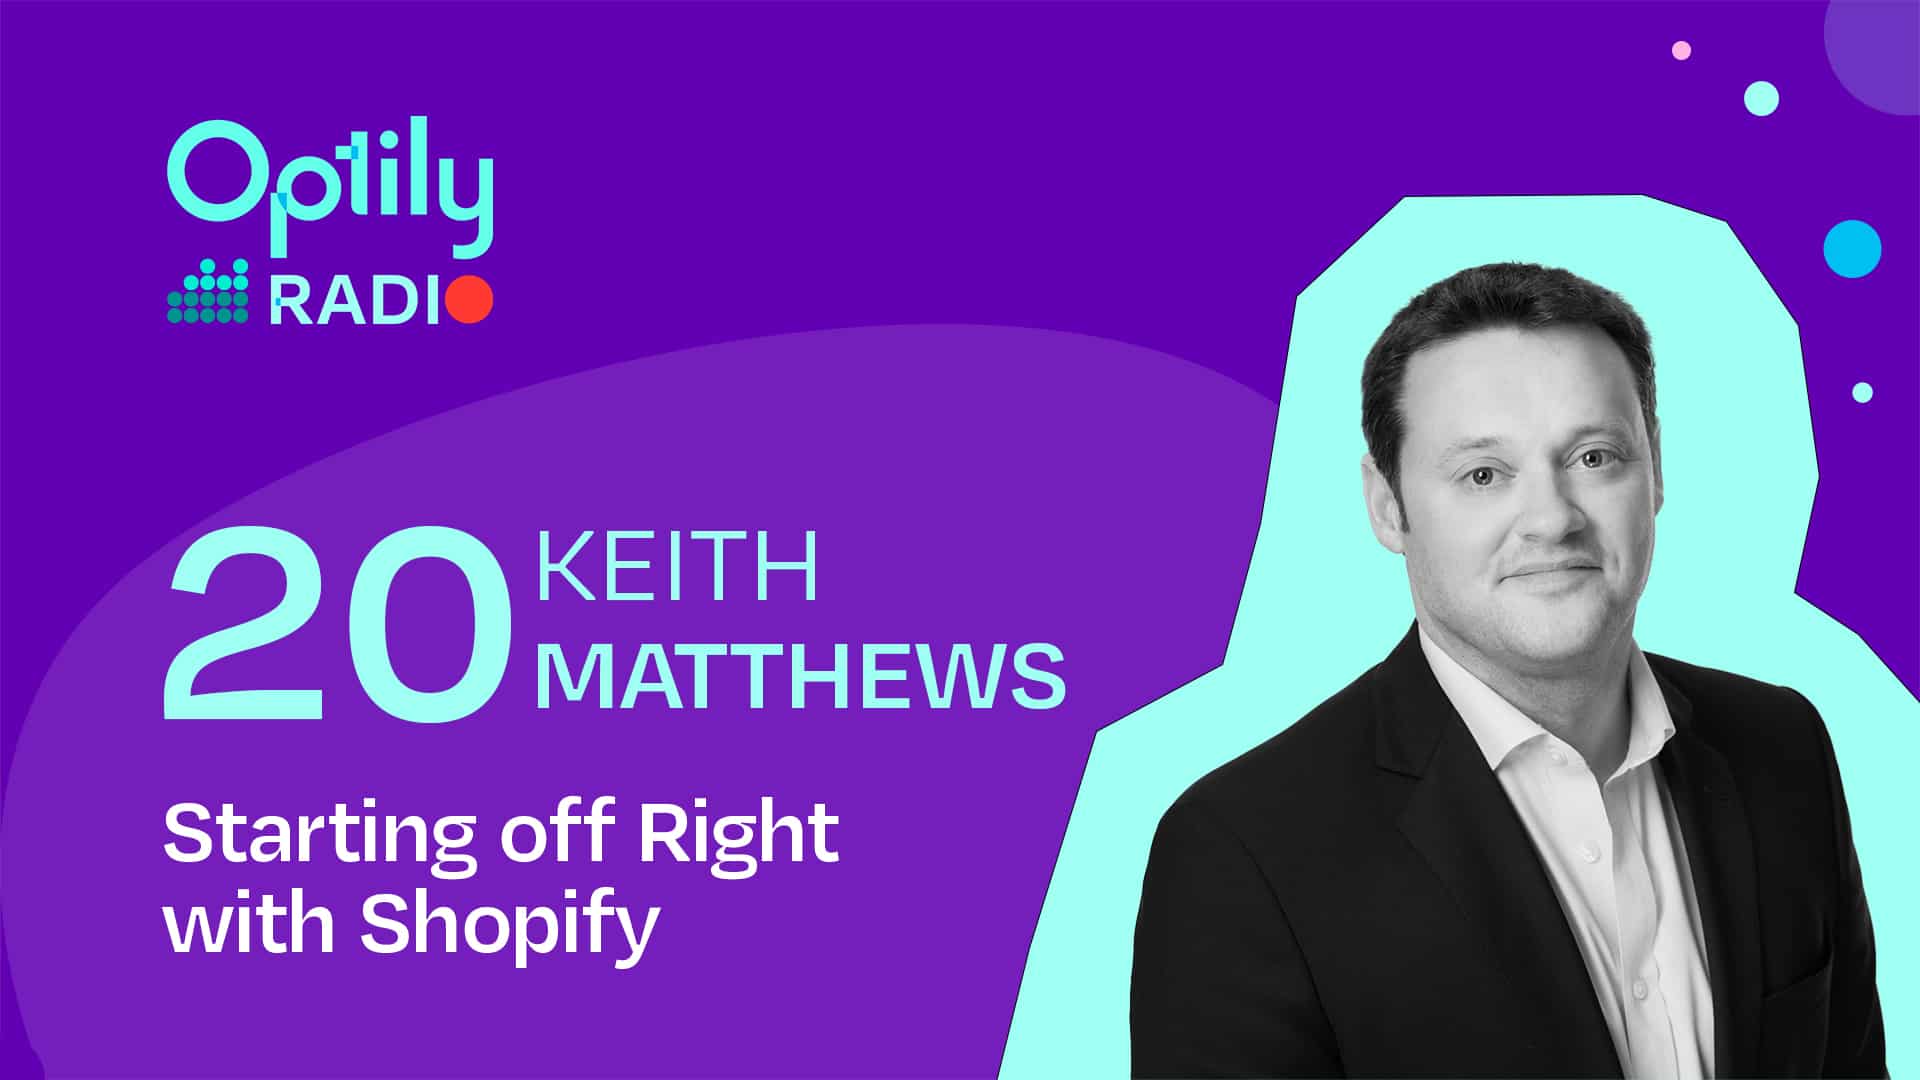 Keith Matthews Optily Radio